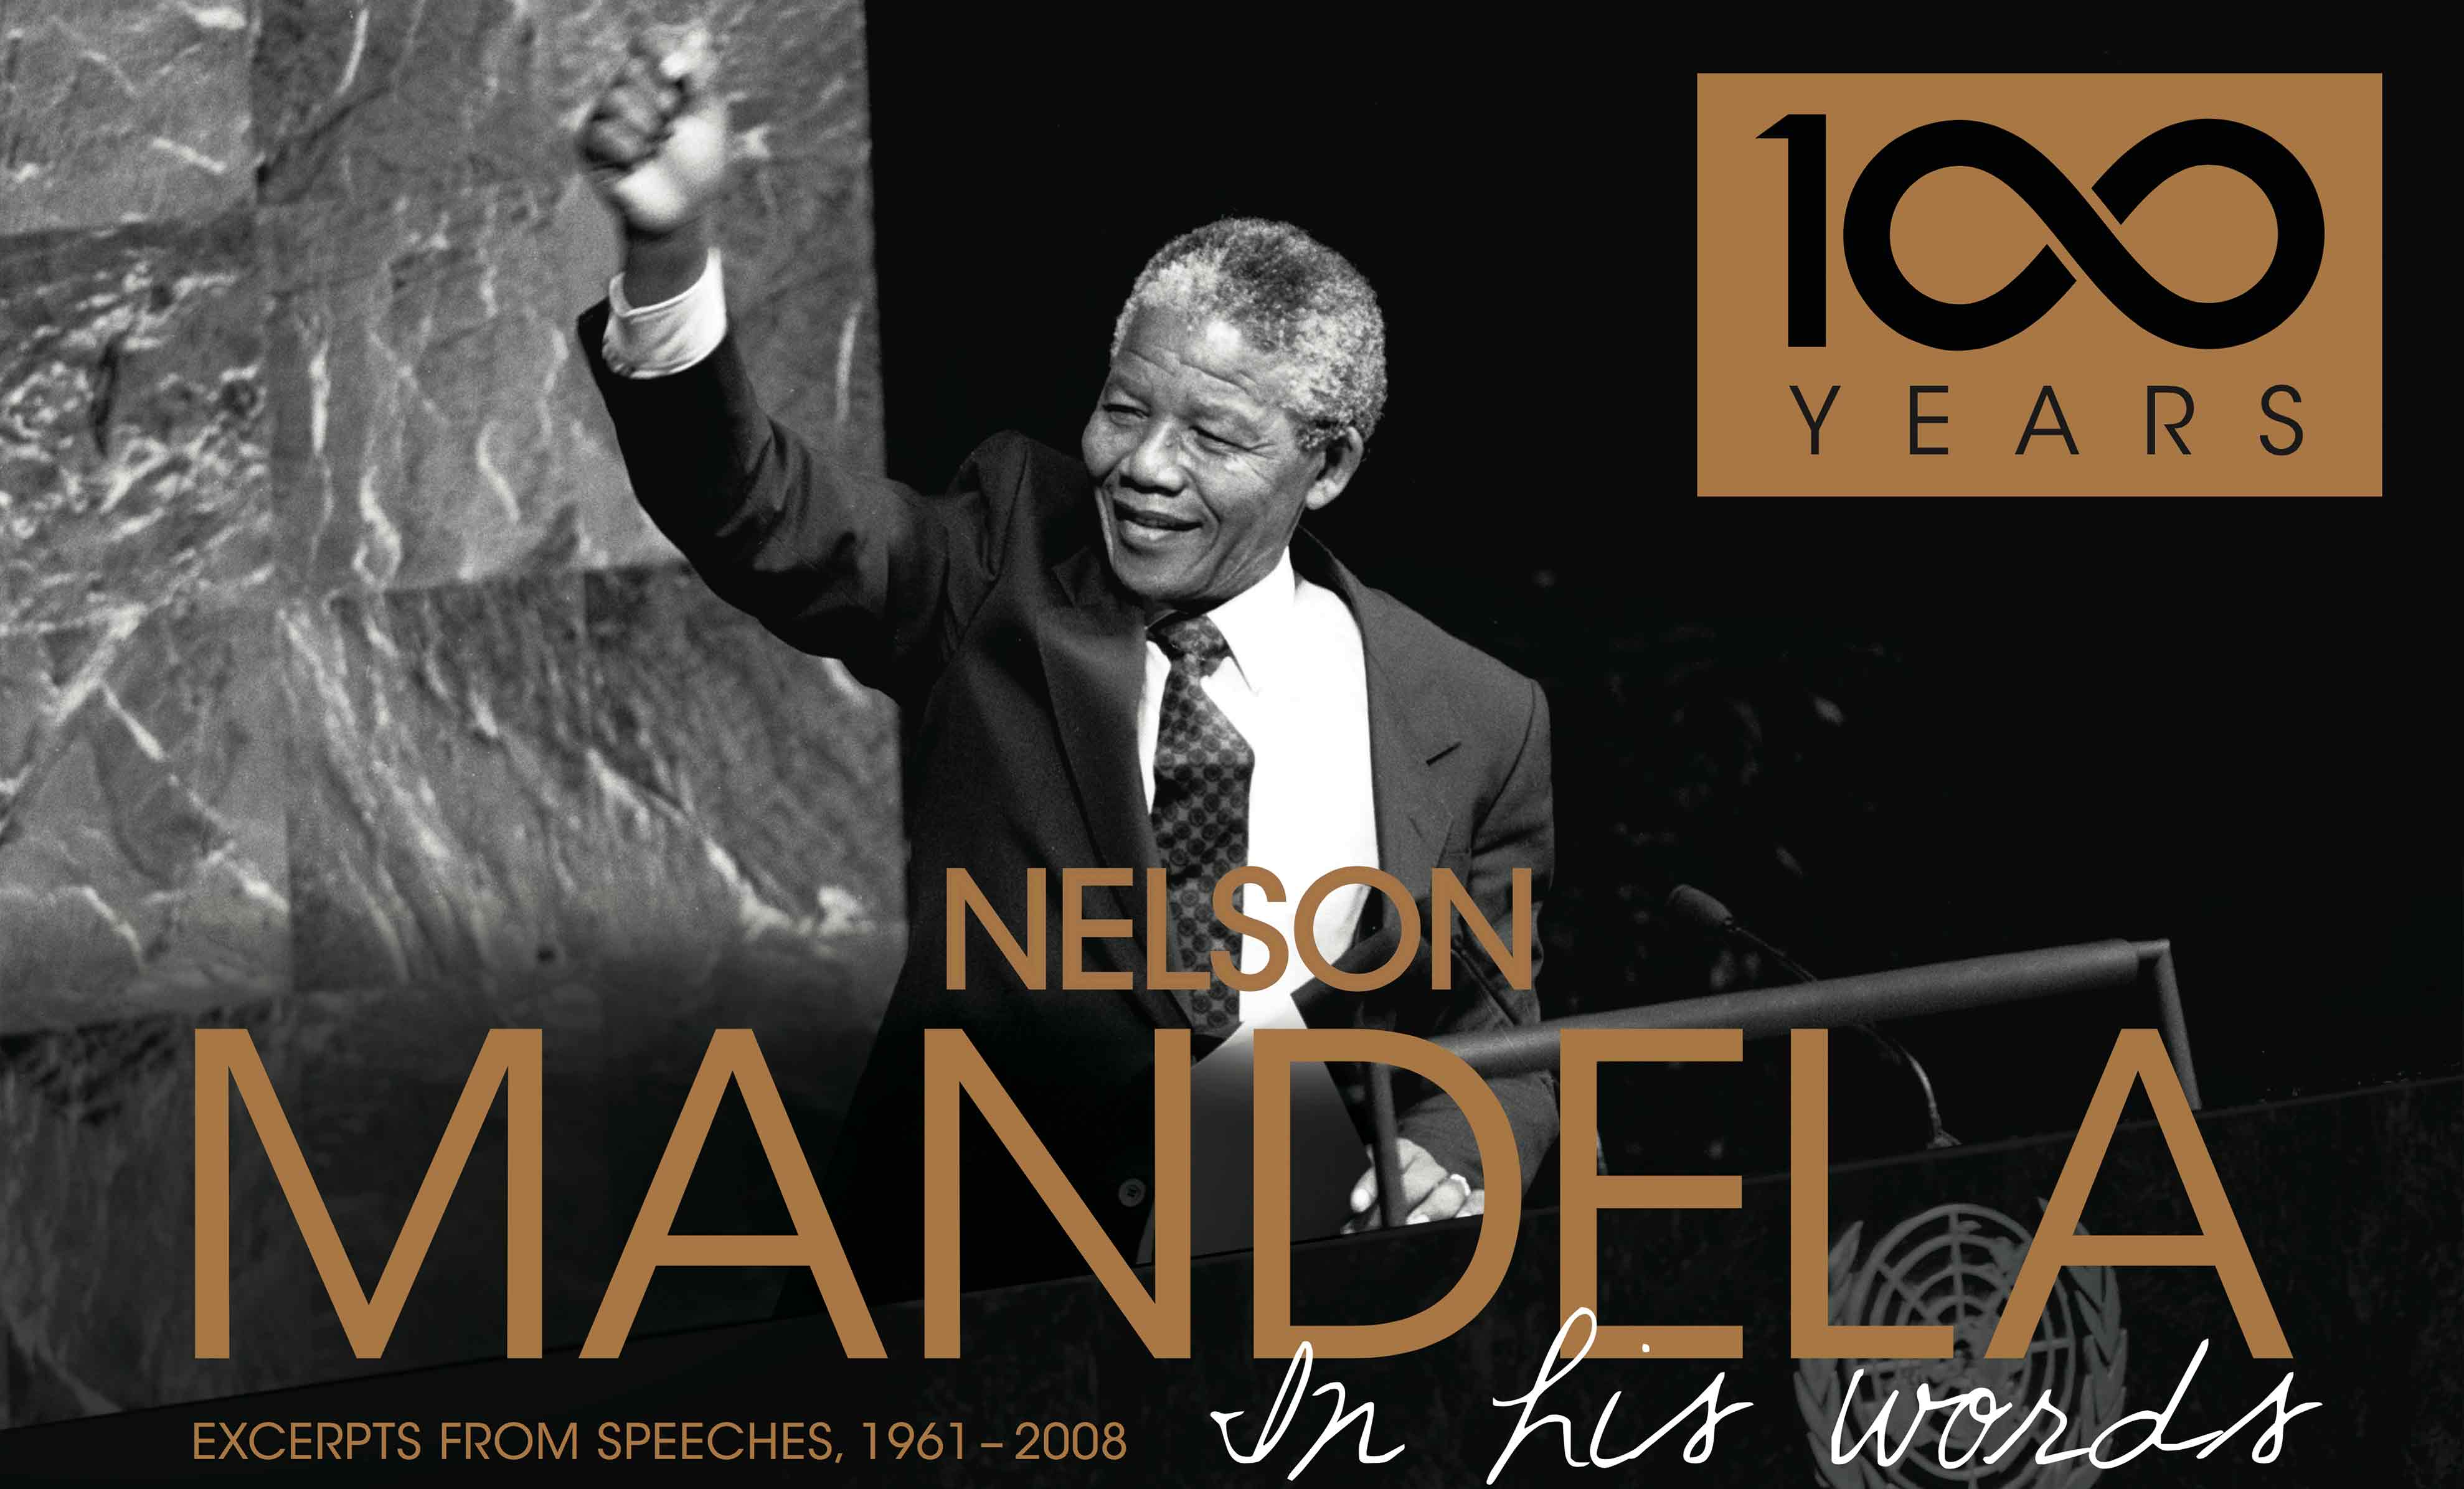 Nelson Mandela International Day, July For Freedom, Justice